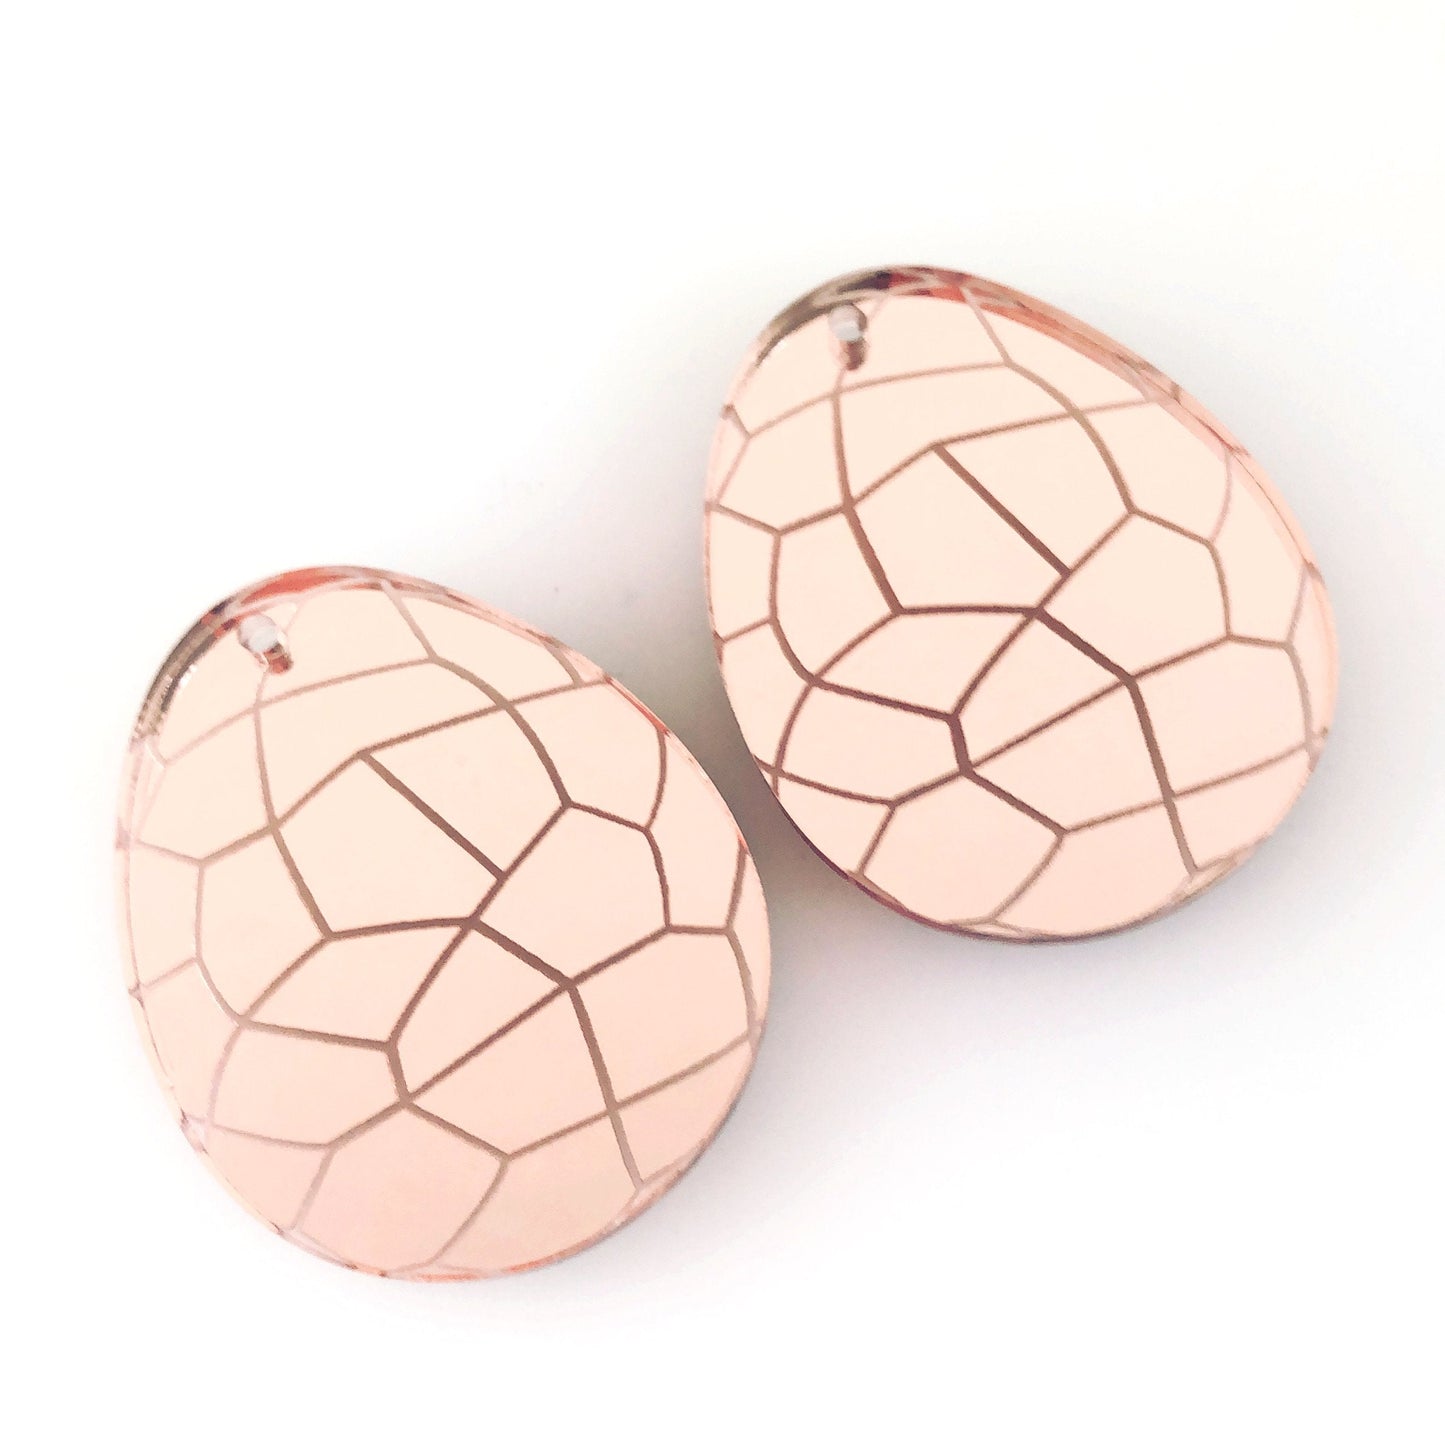 Crafty Cuts Laser Mirror_etched Mirror Crackle Eggs - 2 pair set